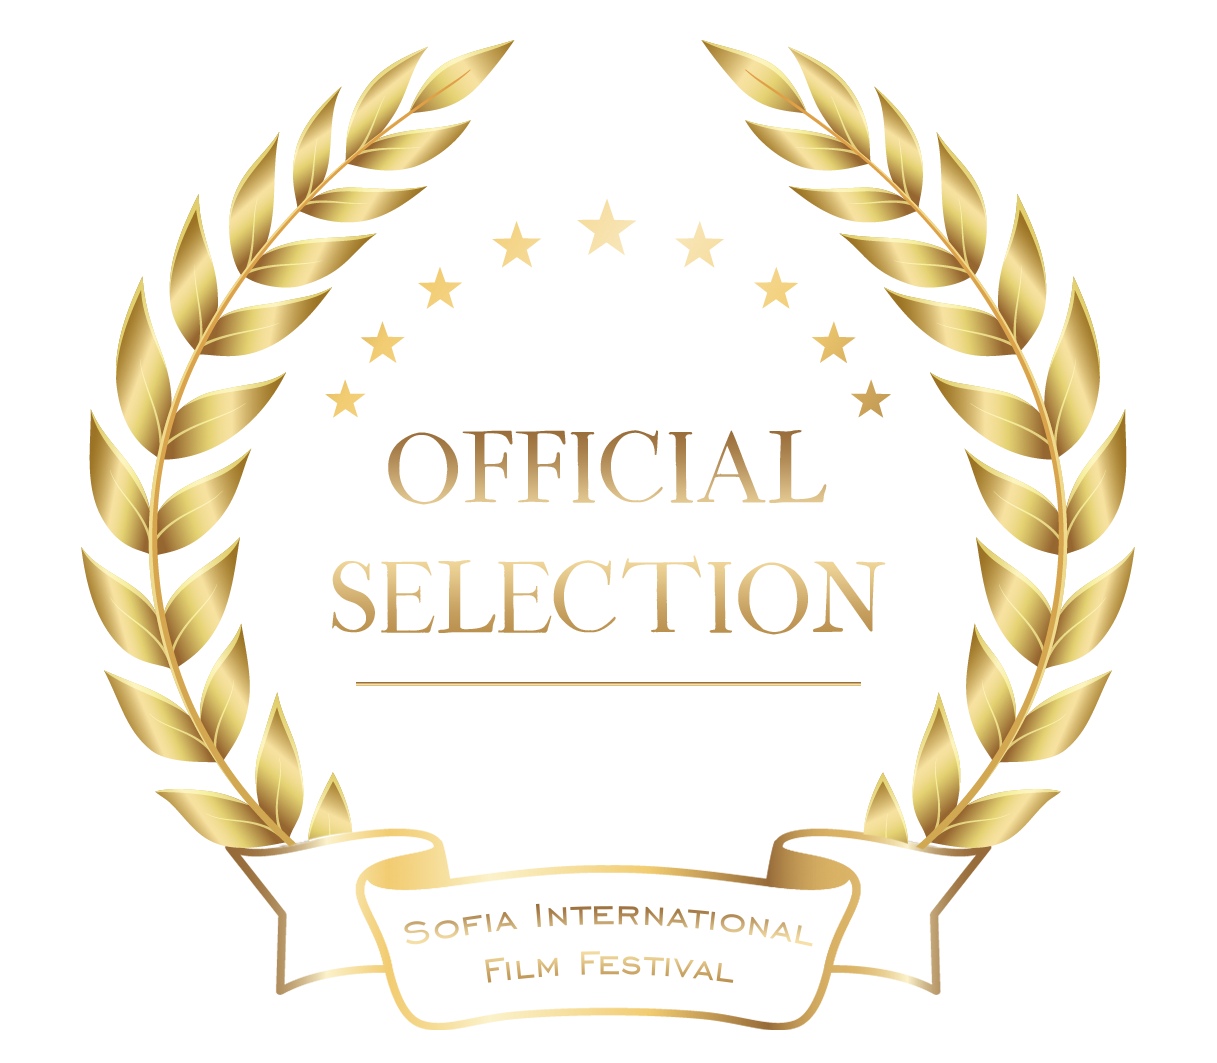 Sofia IFF selection